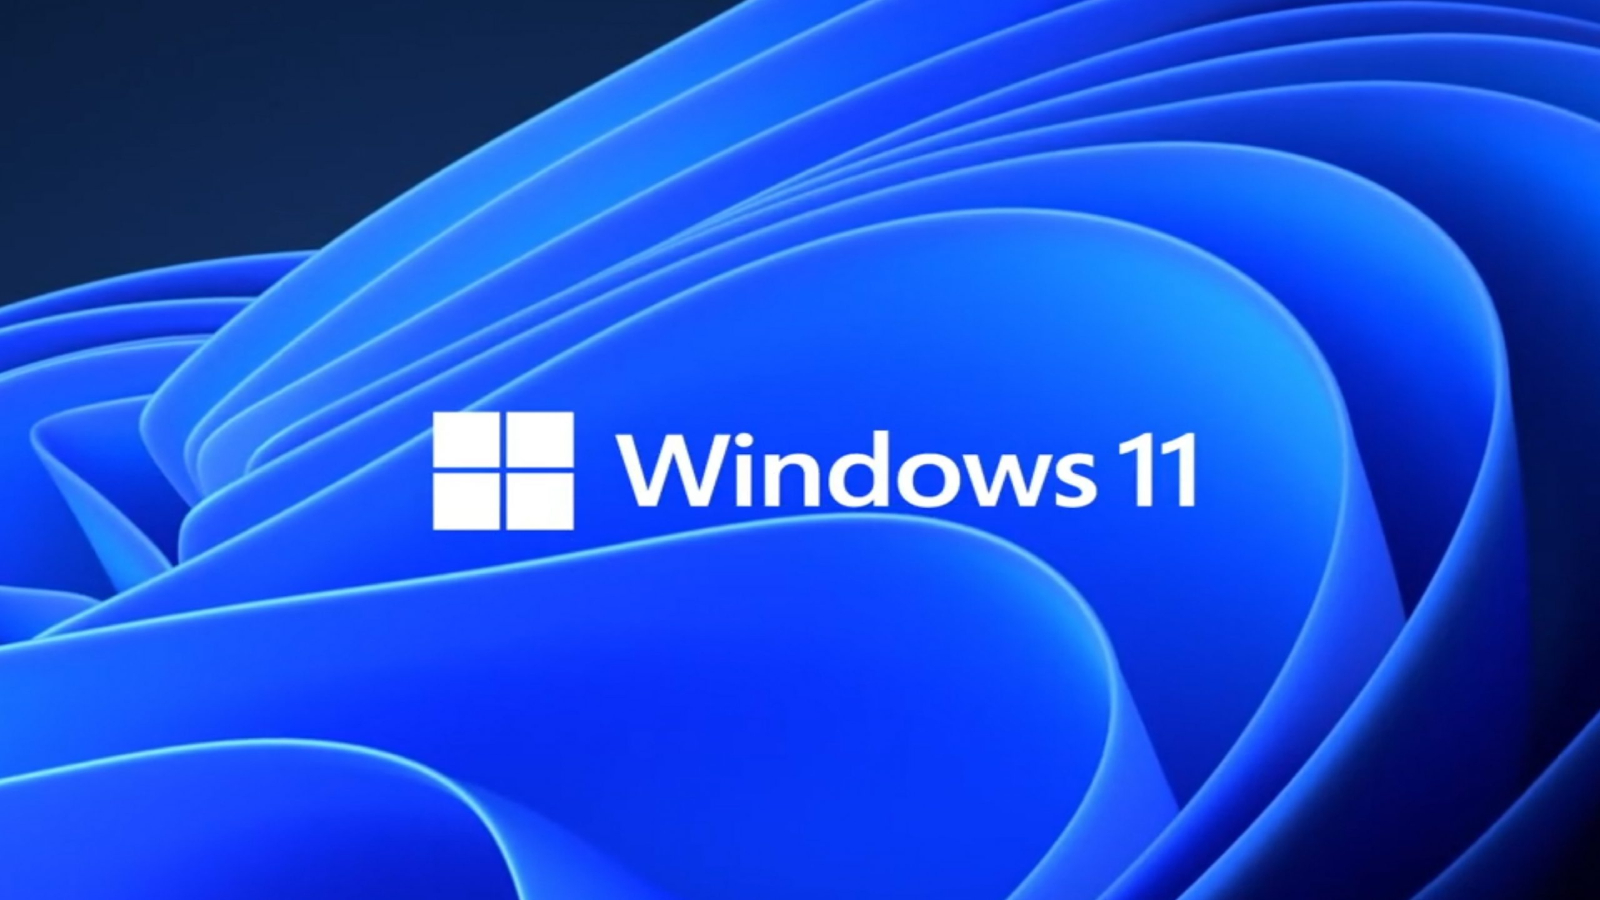 Windows 11 release date